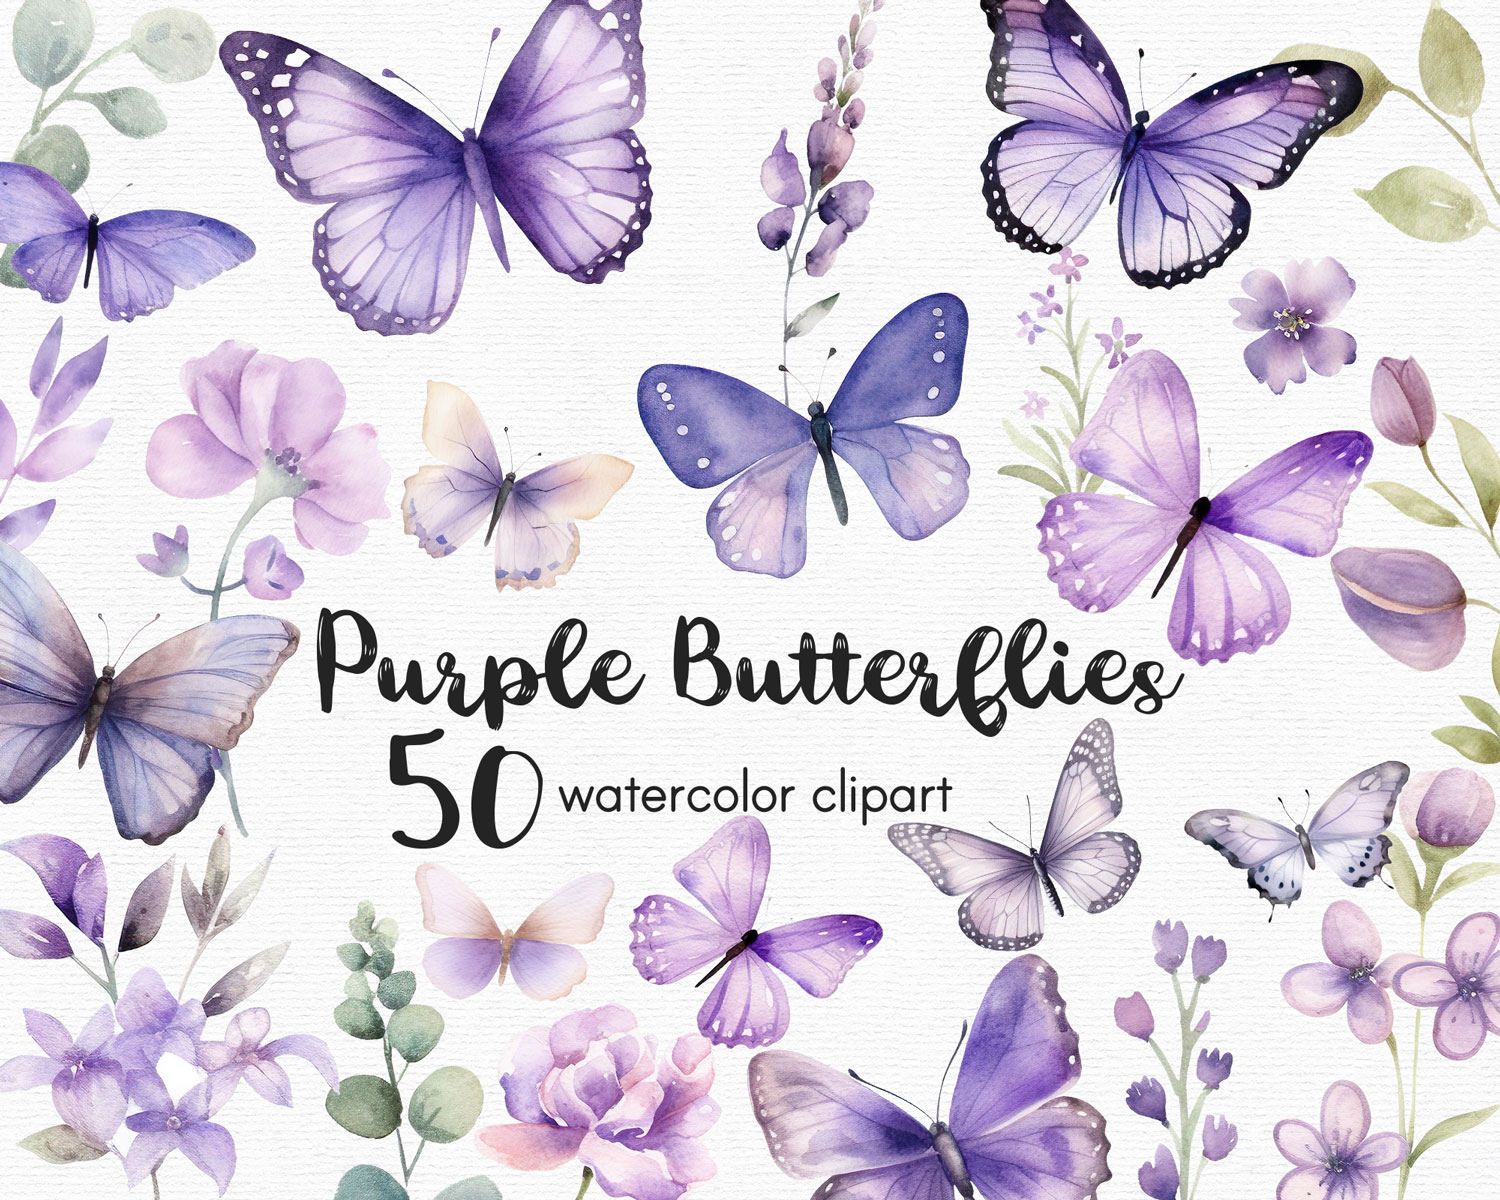 Purple butterflies watercolor clipart set